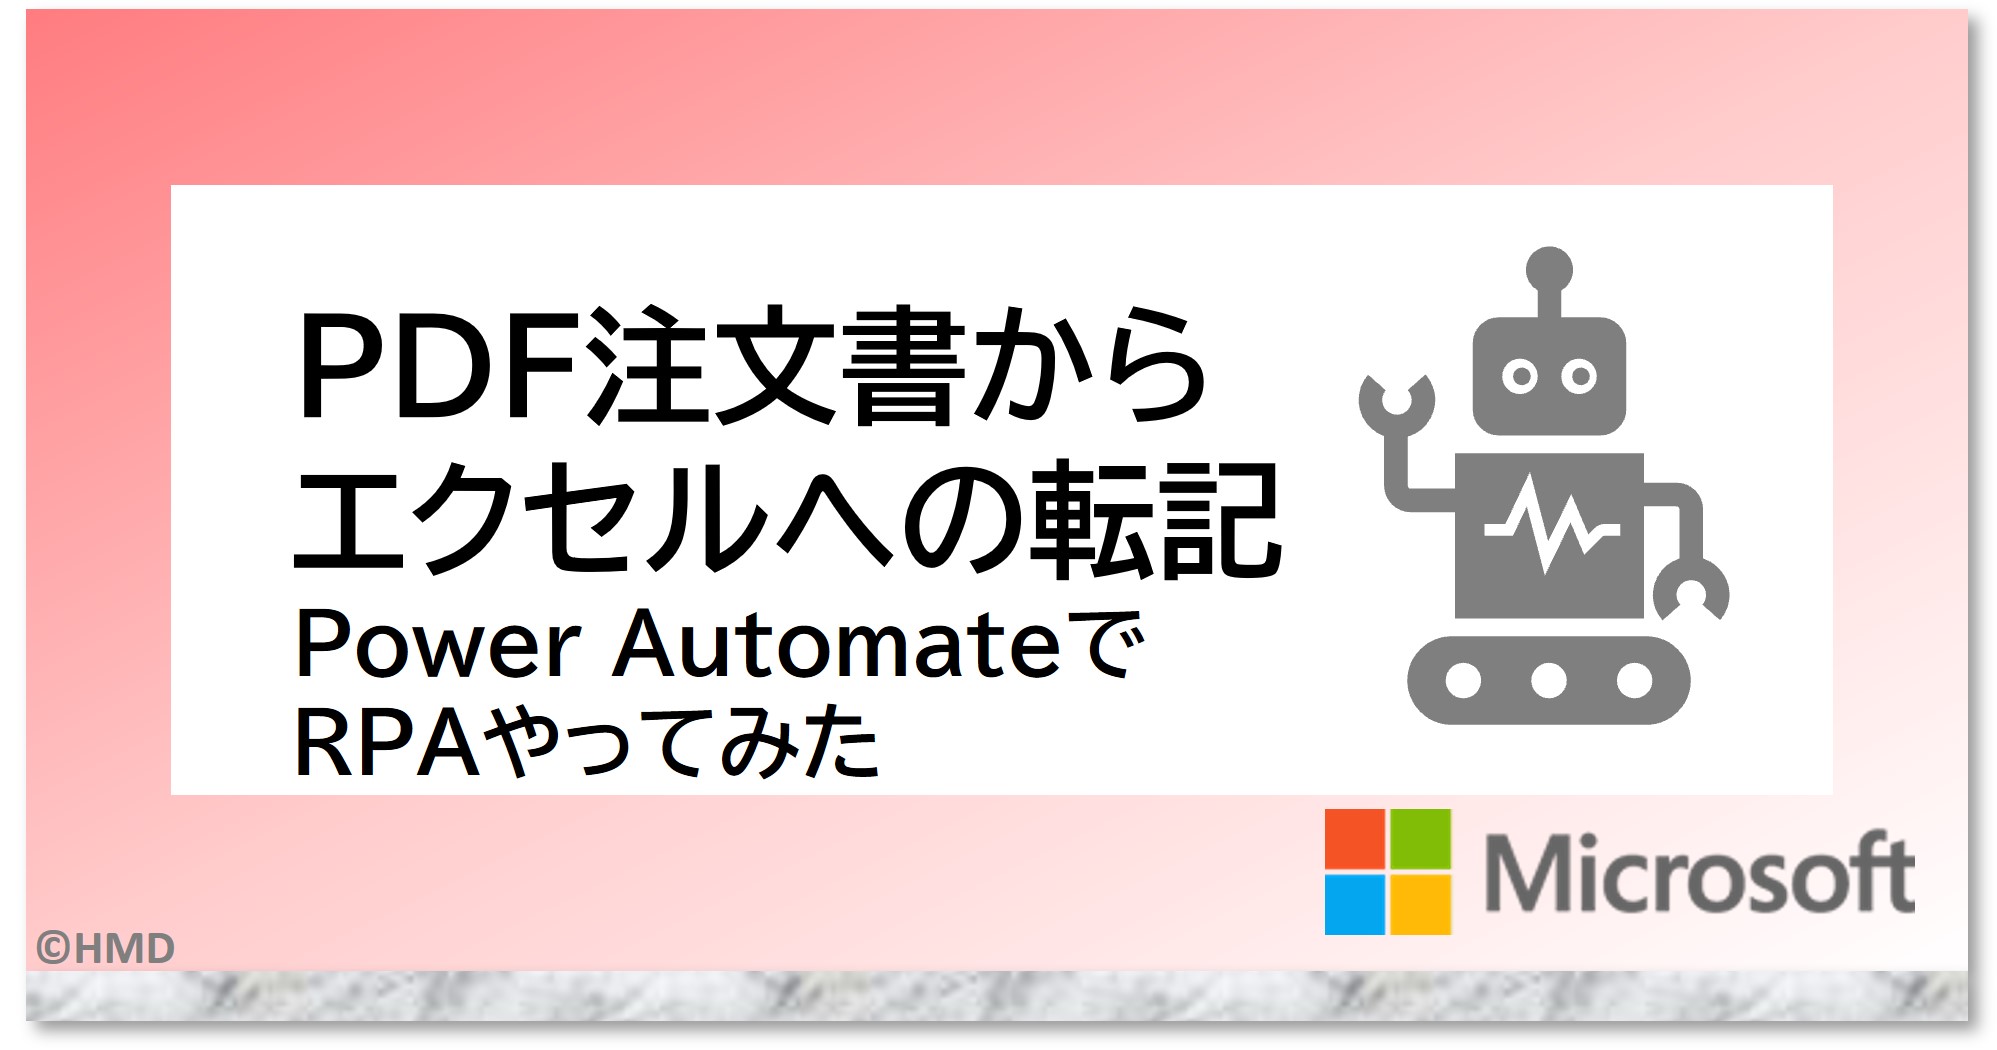 Power Automate for DesktopでPDFからエクセルへの転記を自動化